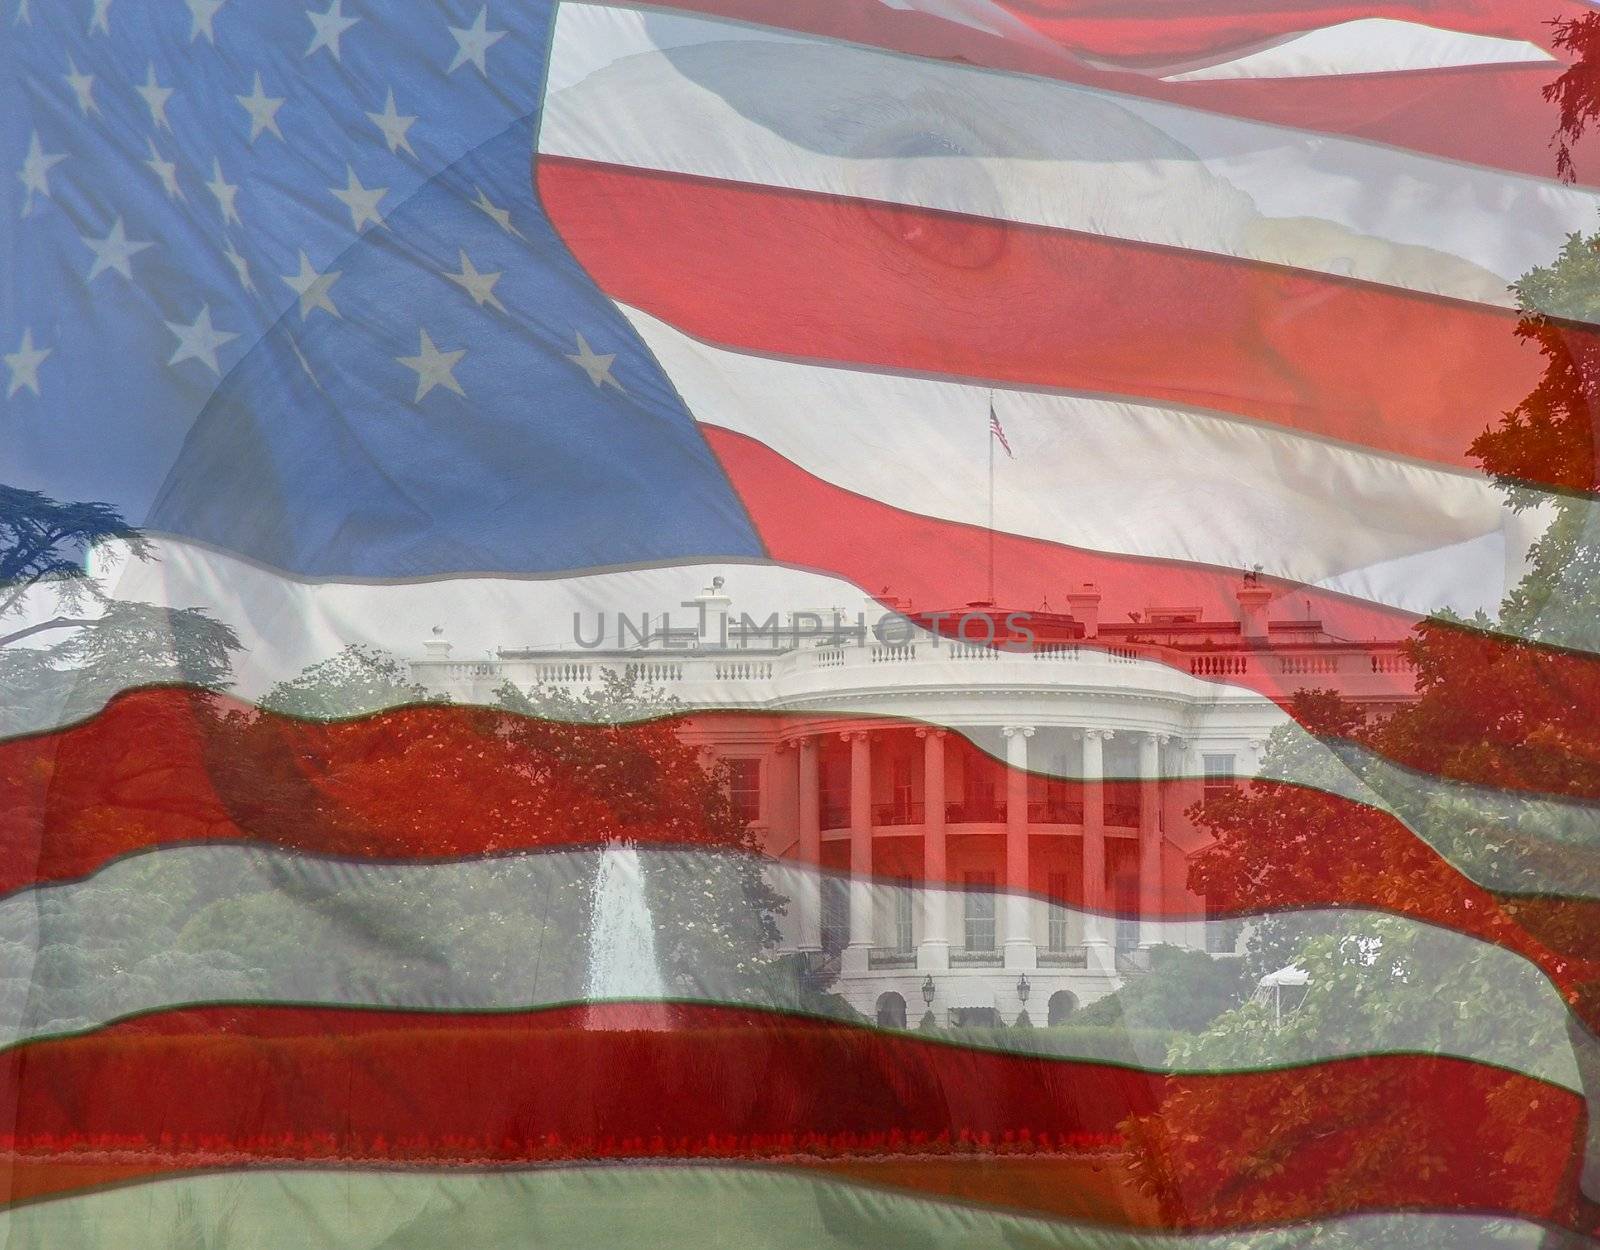 Flag, Eagle, White House. Composite of three photos taken by the author.

